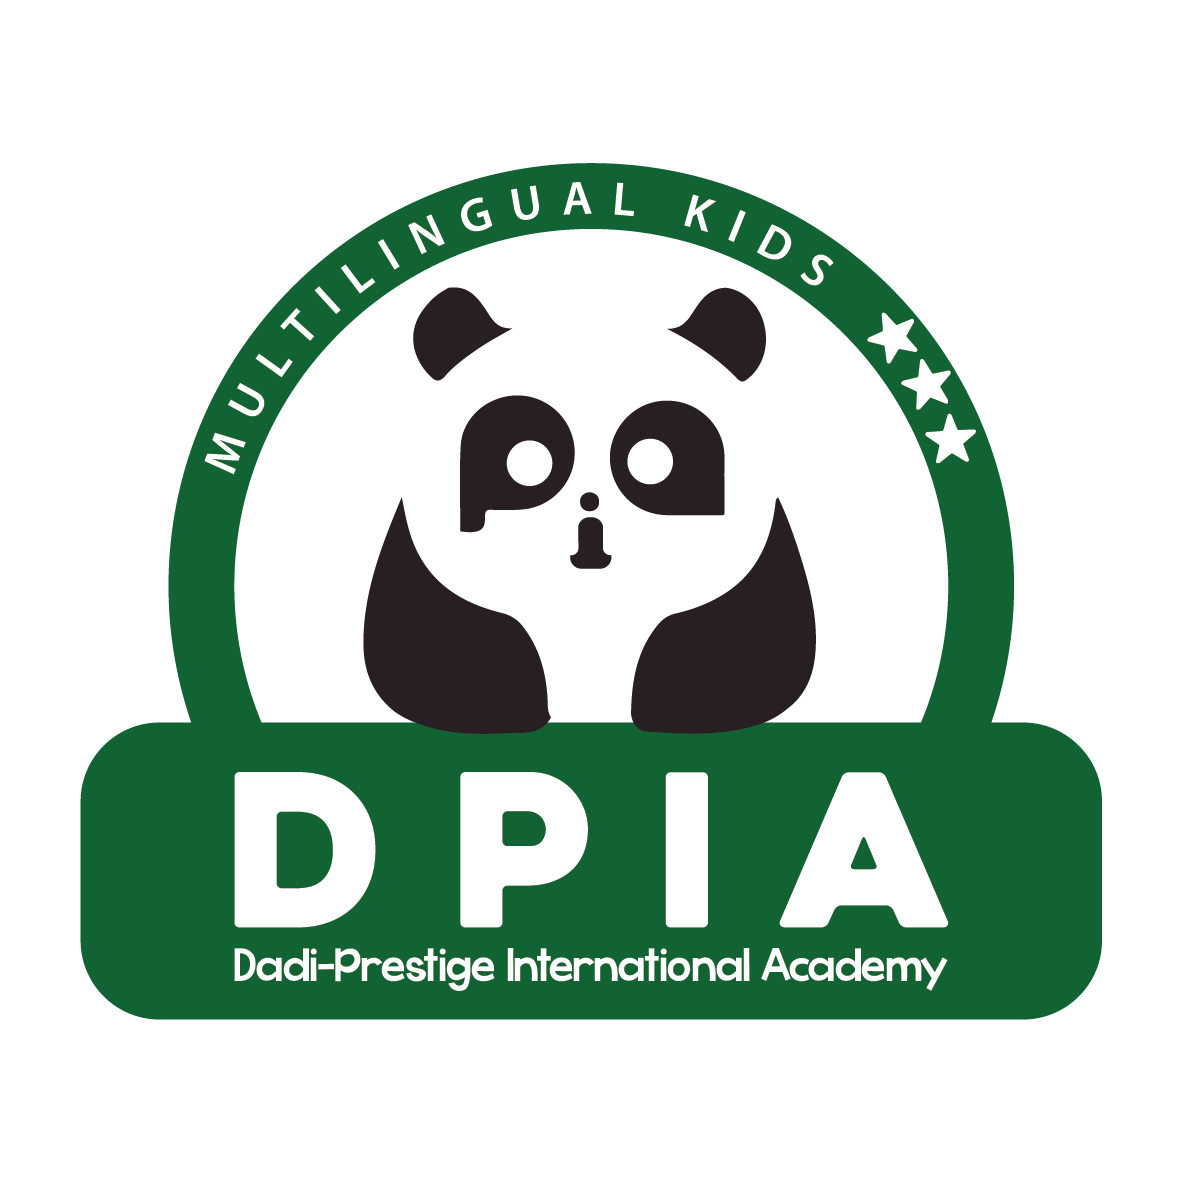 DPIA Dadi-Prestige International Academy